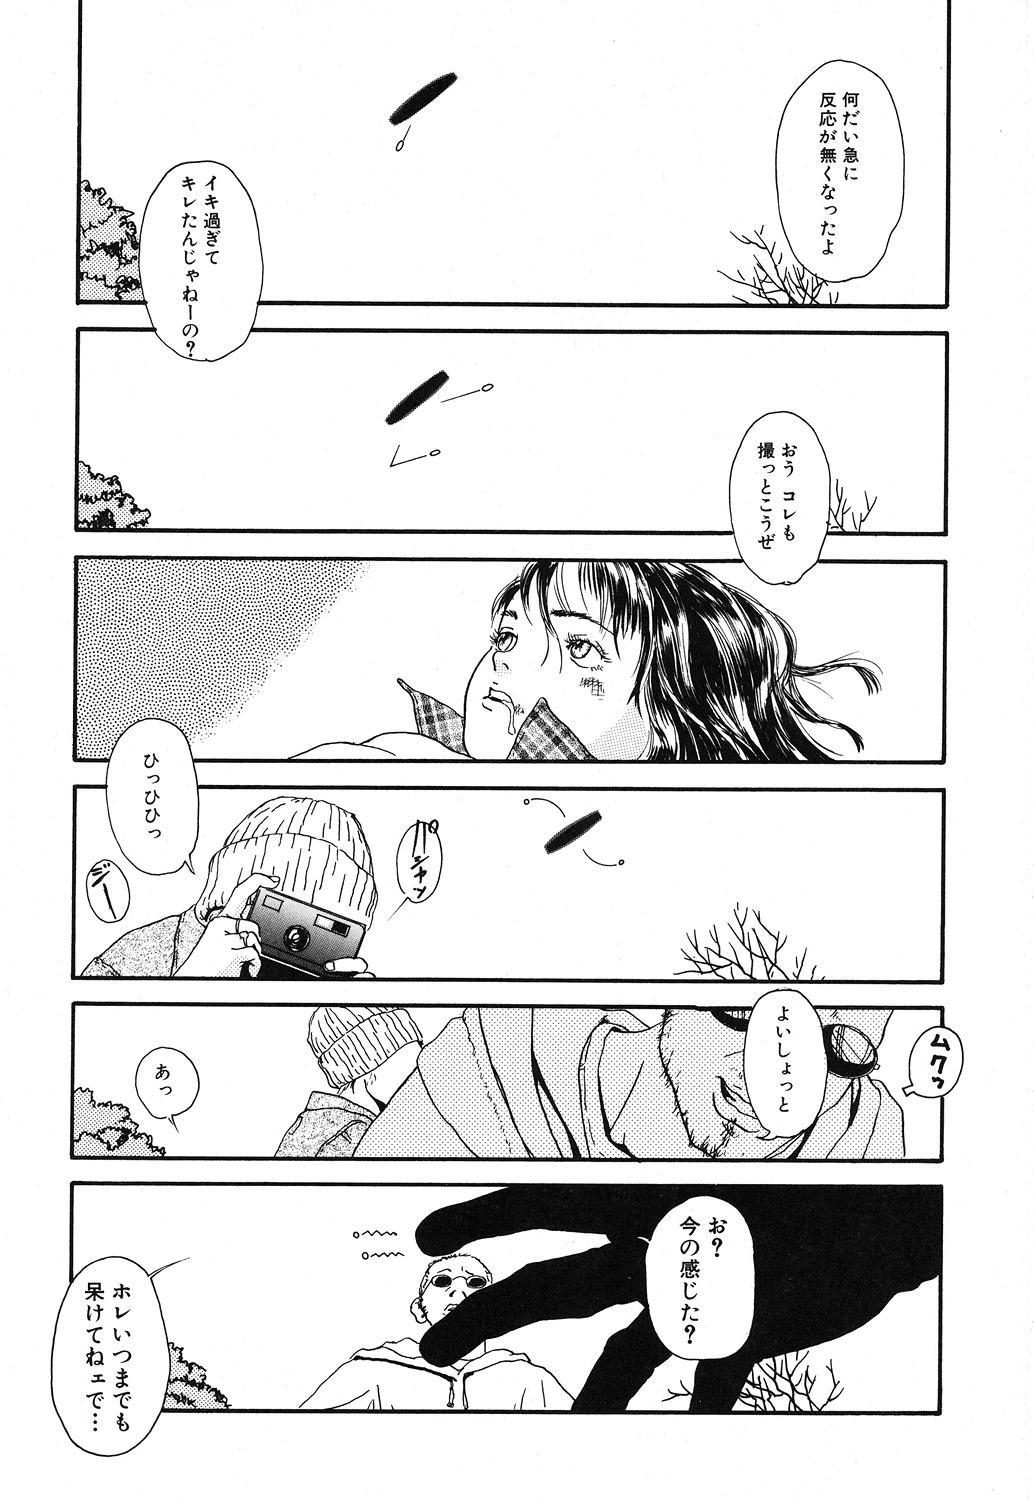 Japanese Genkaku Shousetsu Screaming - Page 9